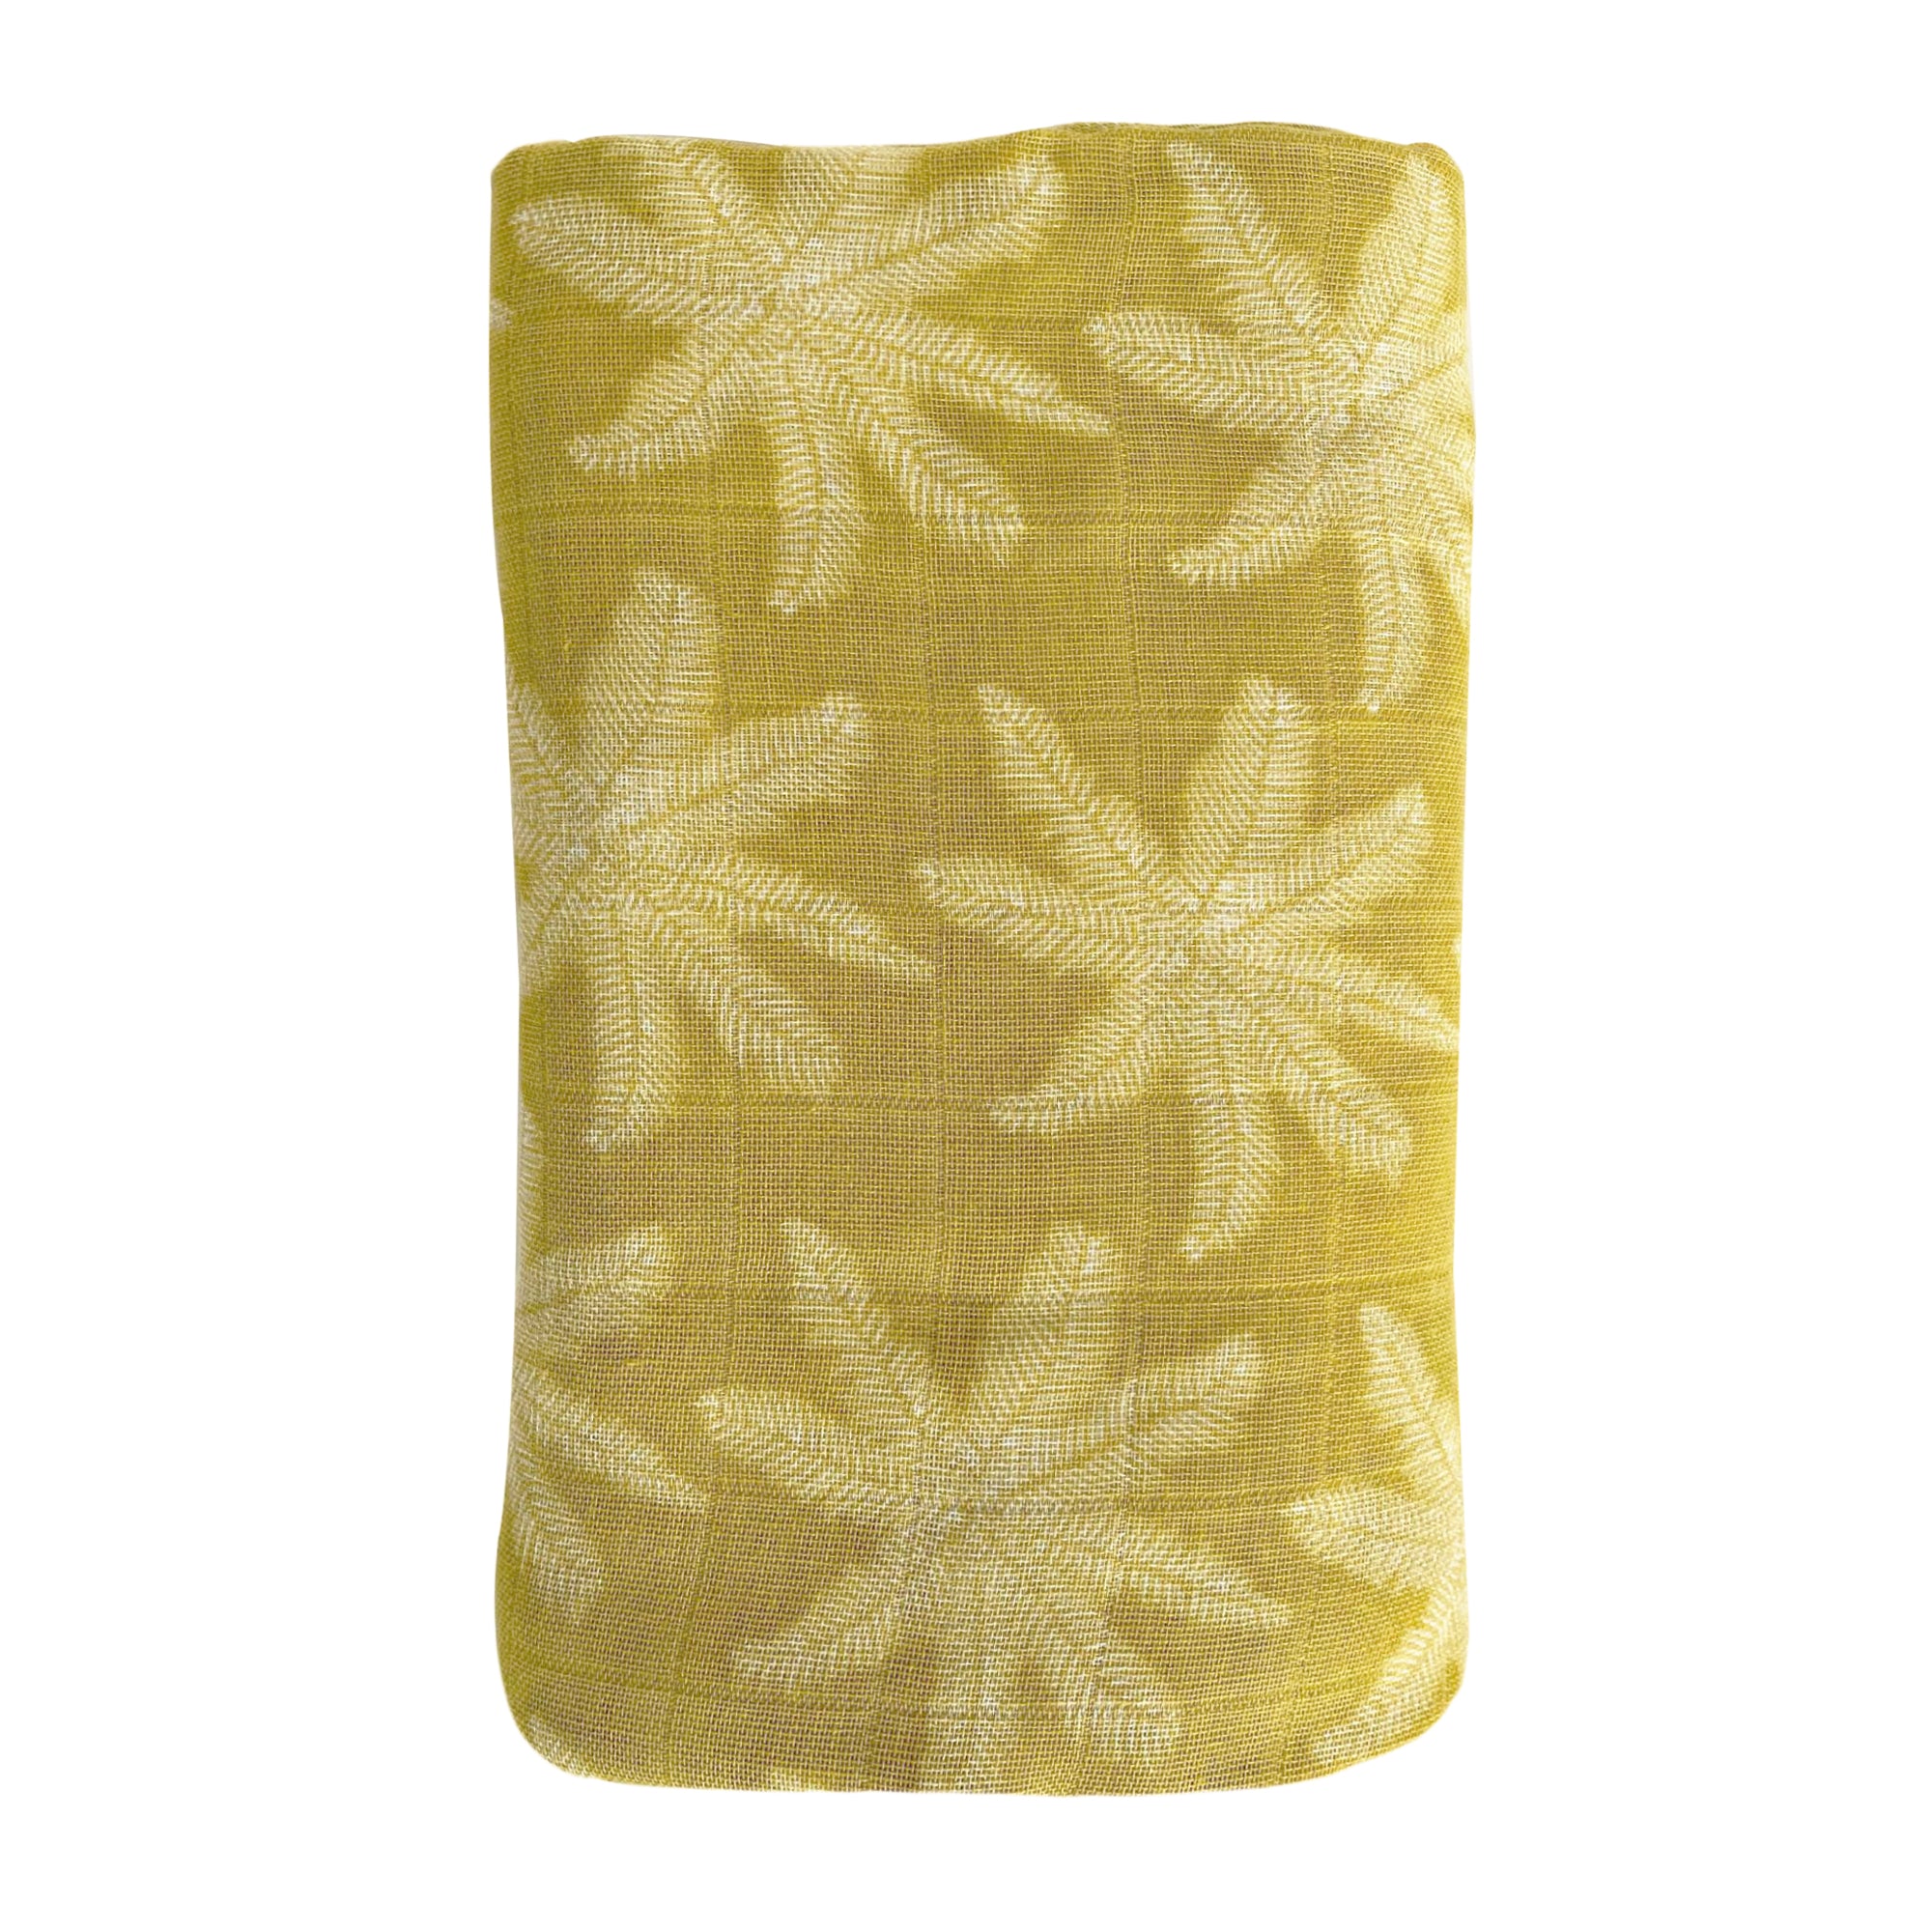 OB Designs Pear Muslin Security Blanket - Palm Print